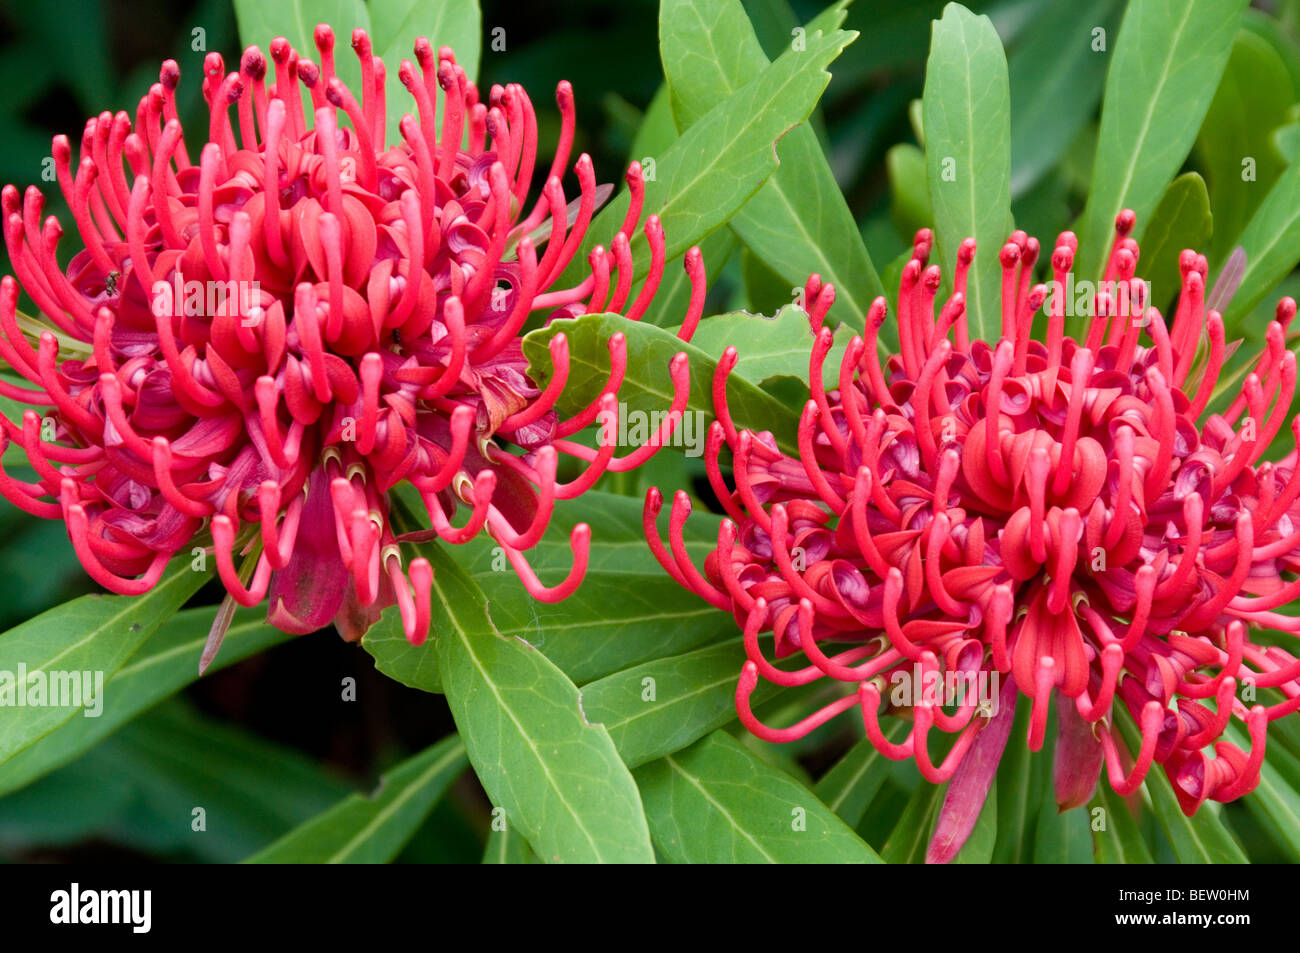 Native waratah or telopea flowers, Australia Stock Photo